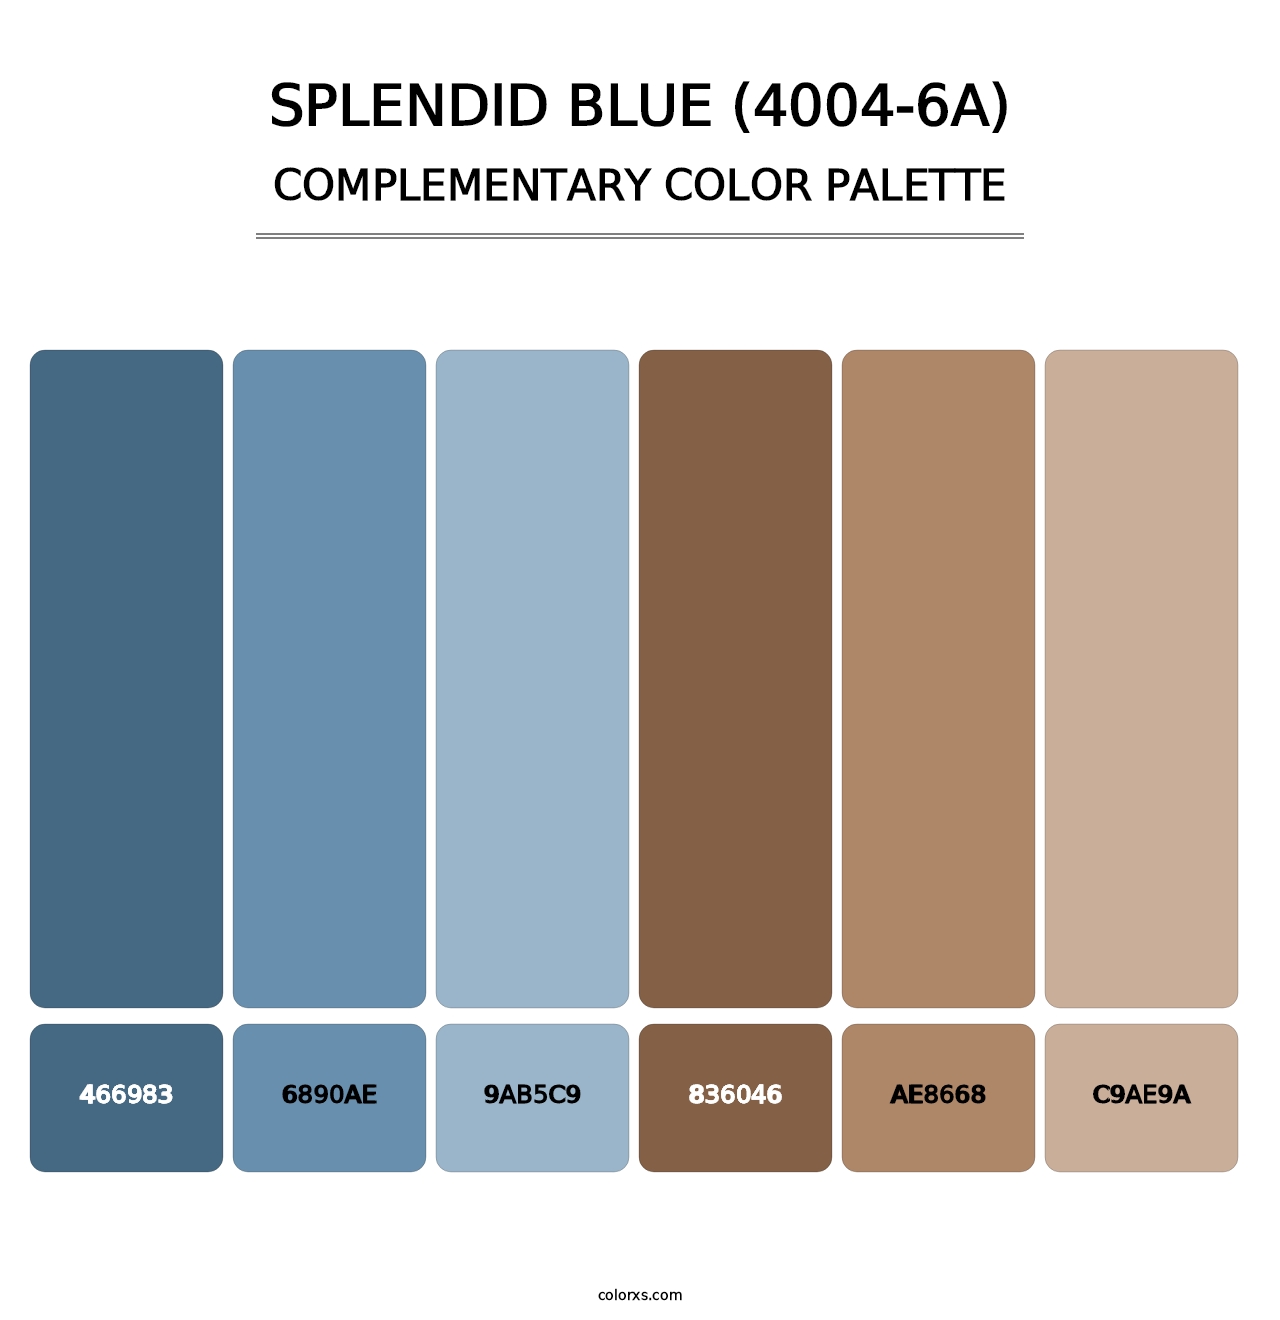 Splendid Blue (4004-6A) - Complementary Color Palette